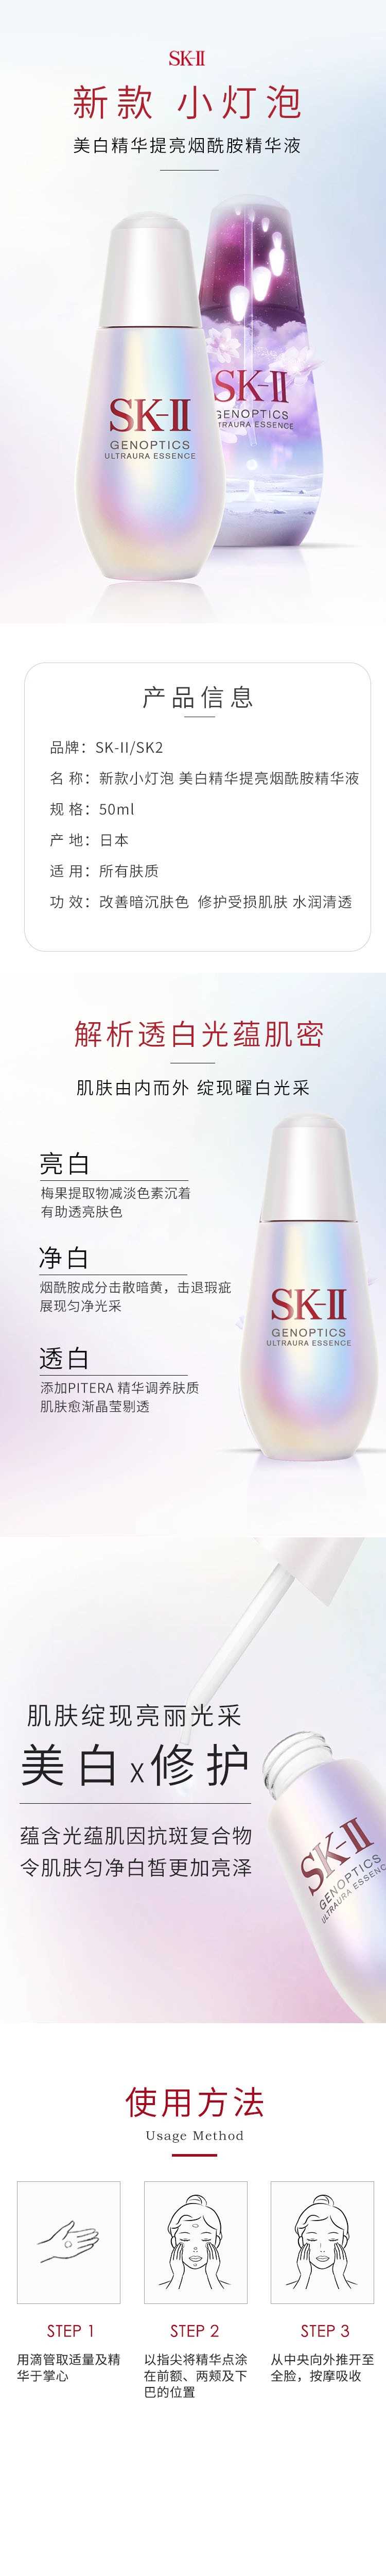 SK-IISK2 新款小灯泡50ml美白精华提亮烟酰胺精华液.jpg